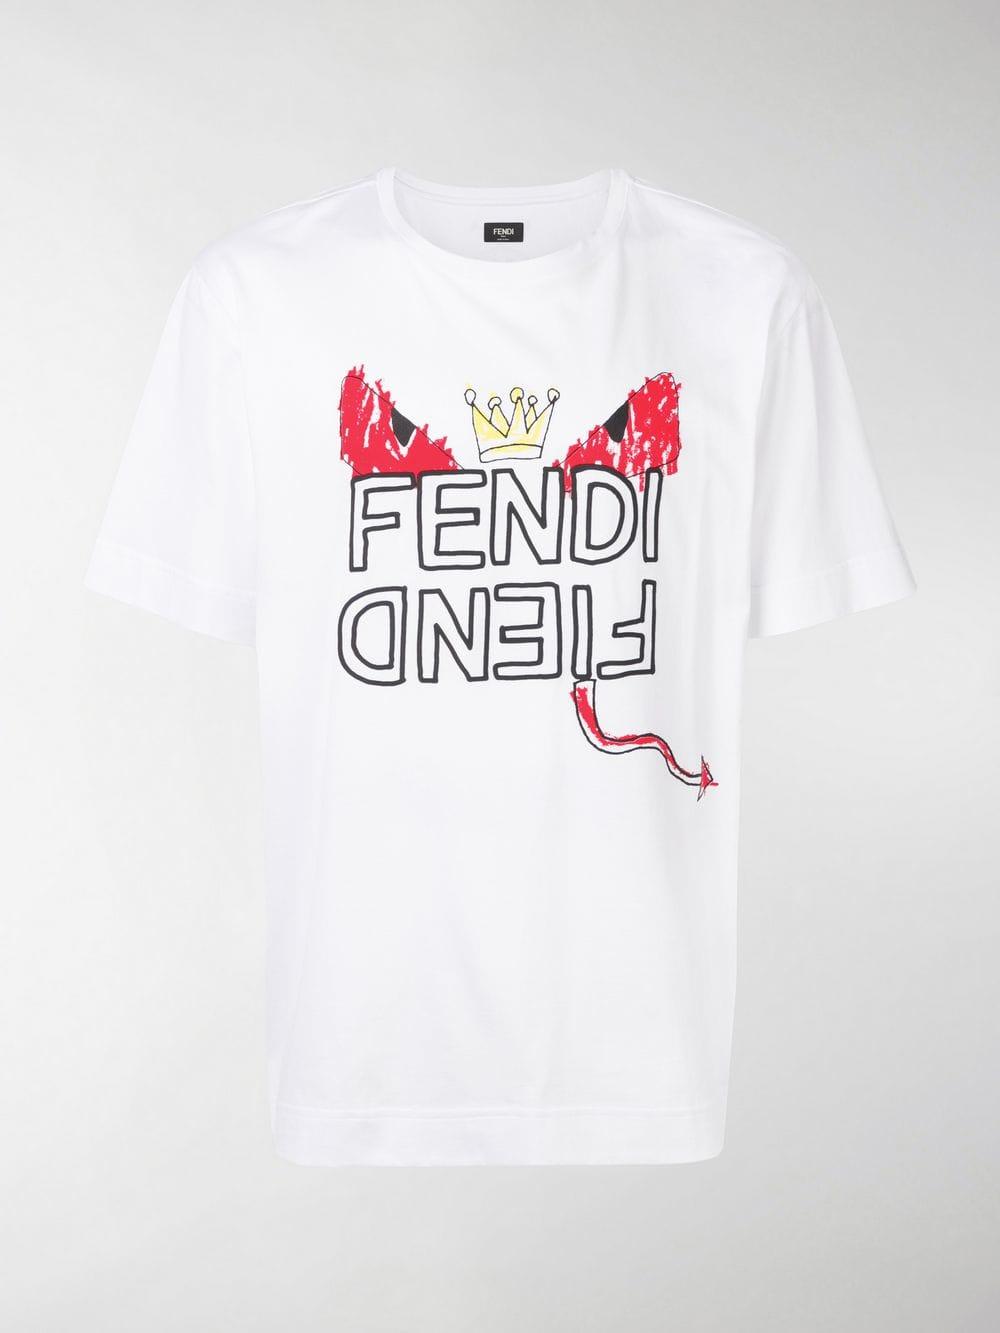 Fendi Shirt White Hotsell, 60% OFF | campingcanyelles.com